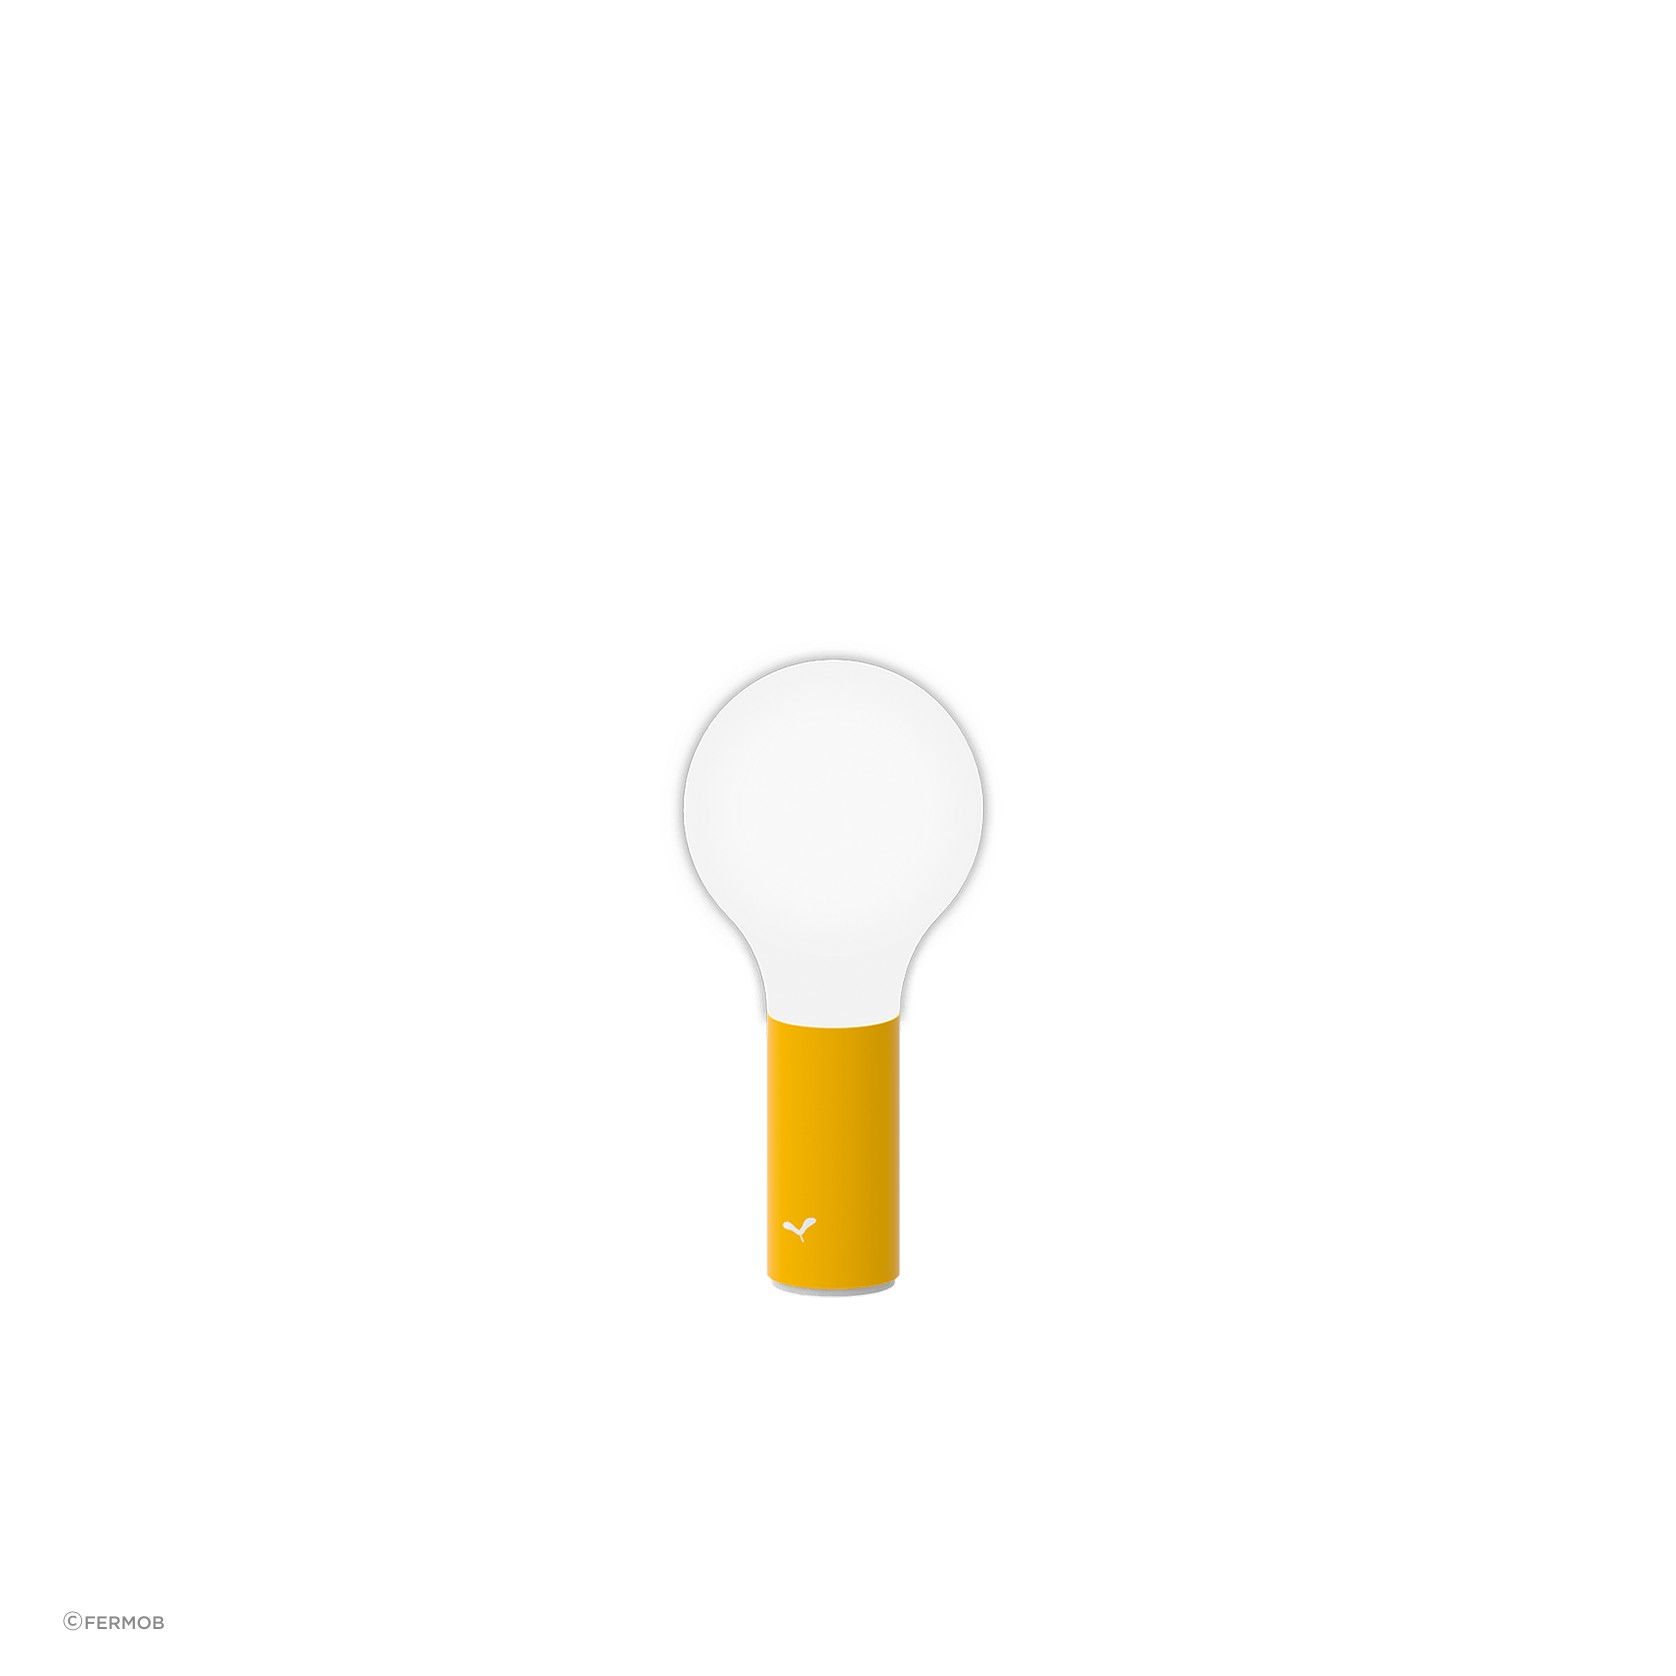 Aplô Lamp 24cm by Fermob gallery detail image